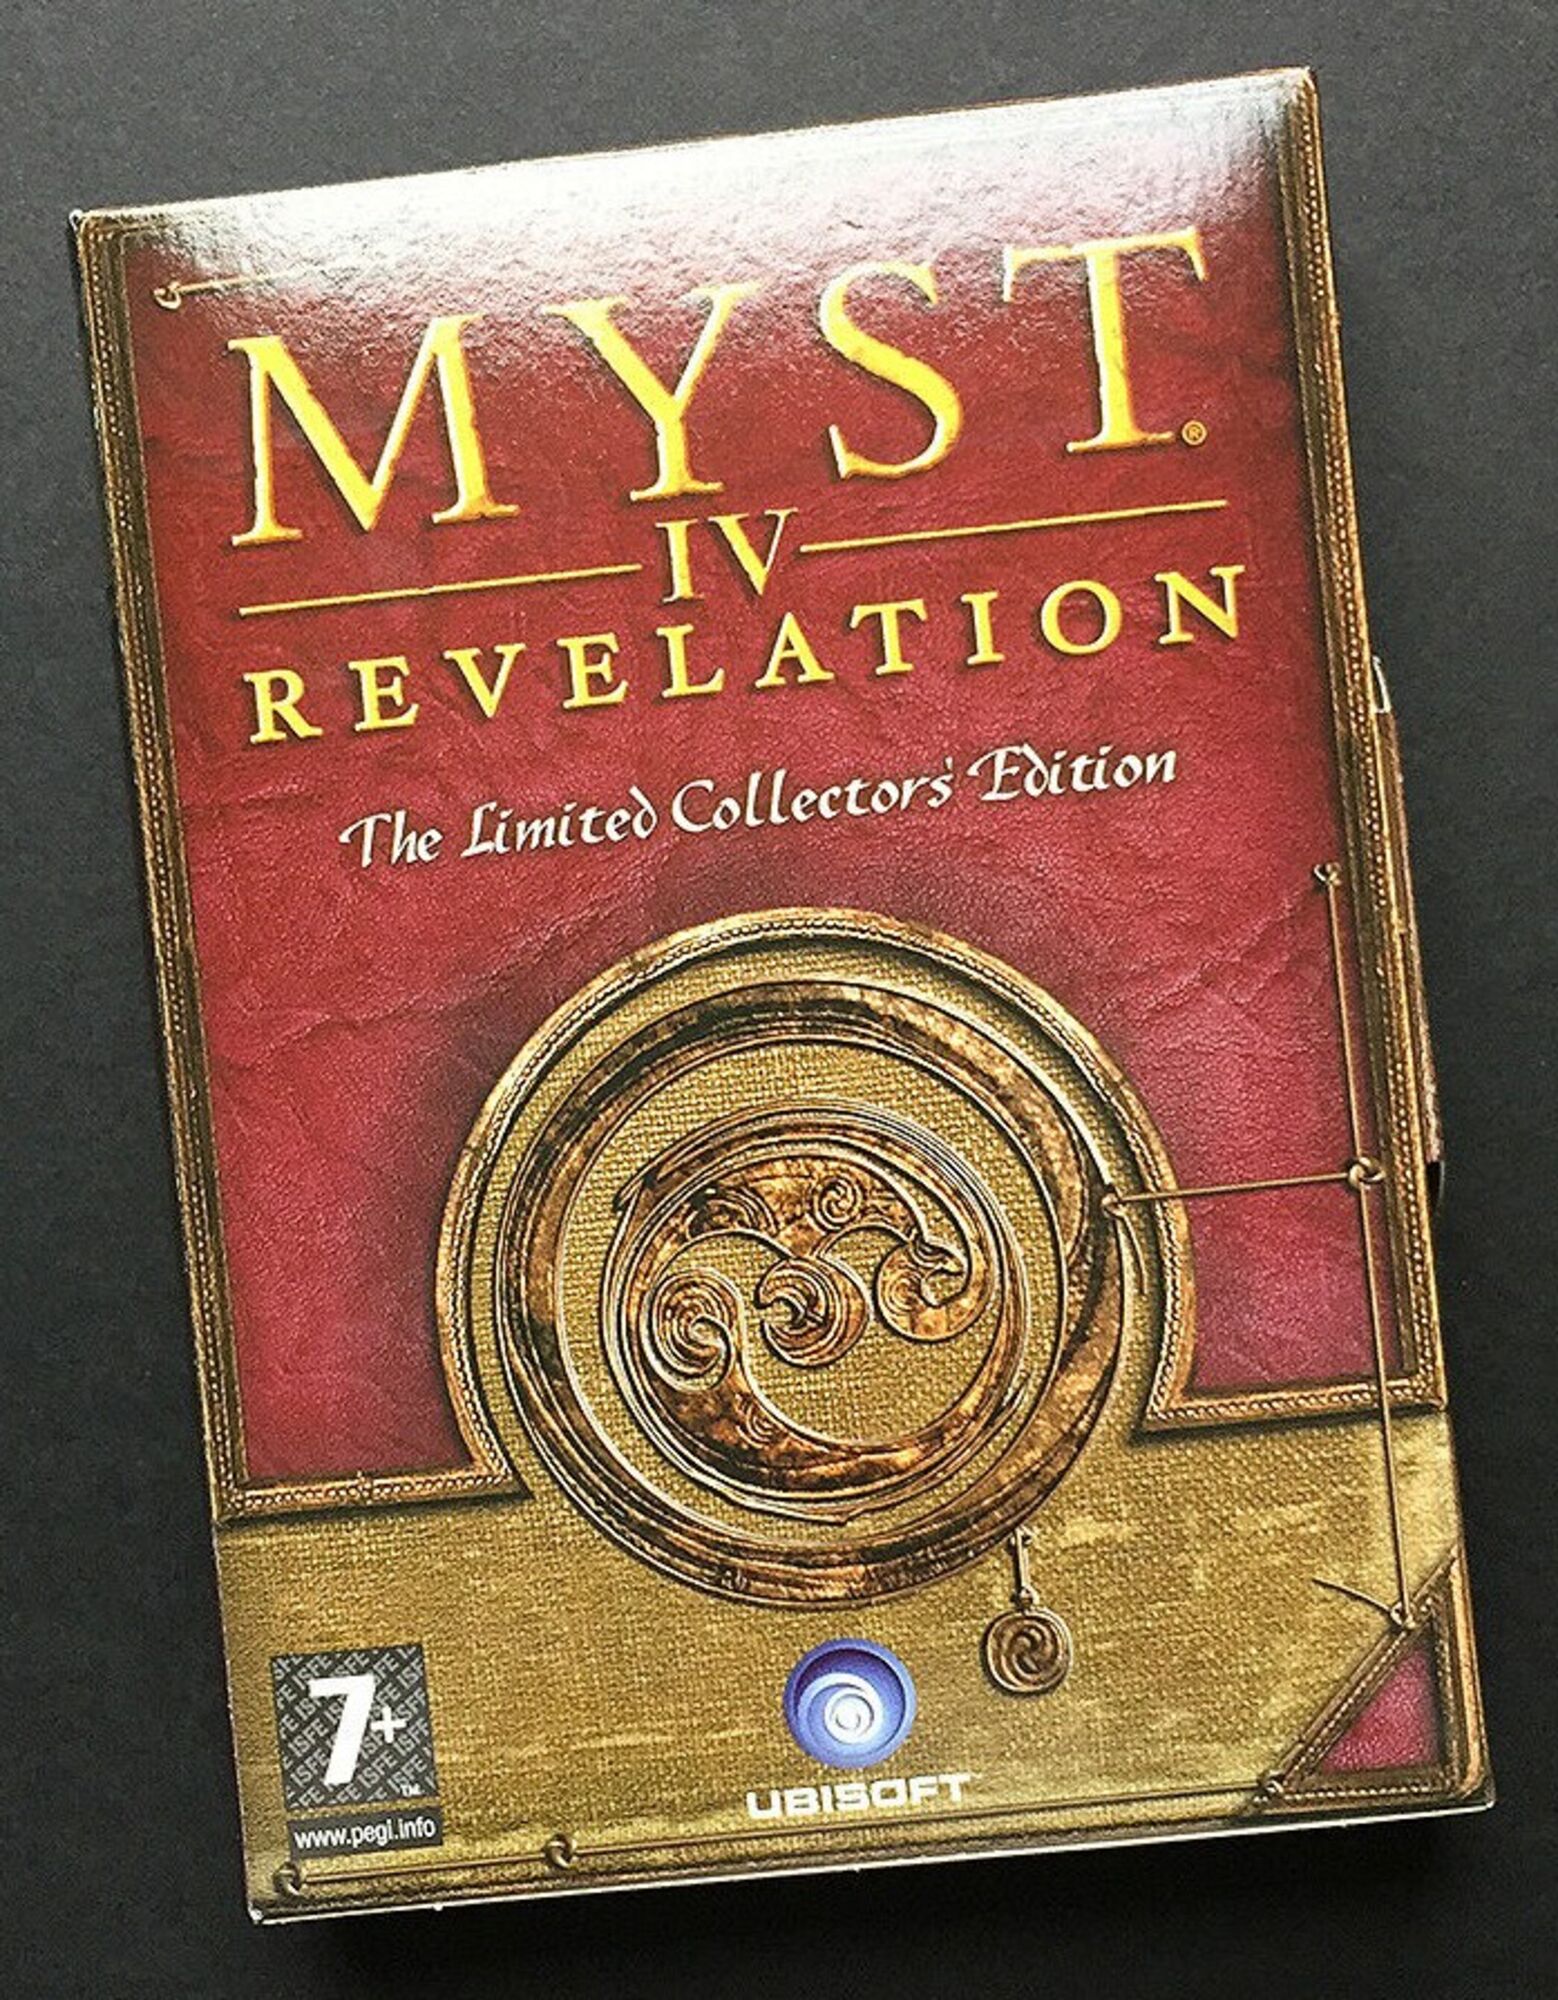 myst iv revelation pc download